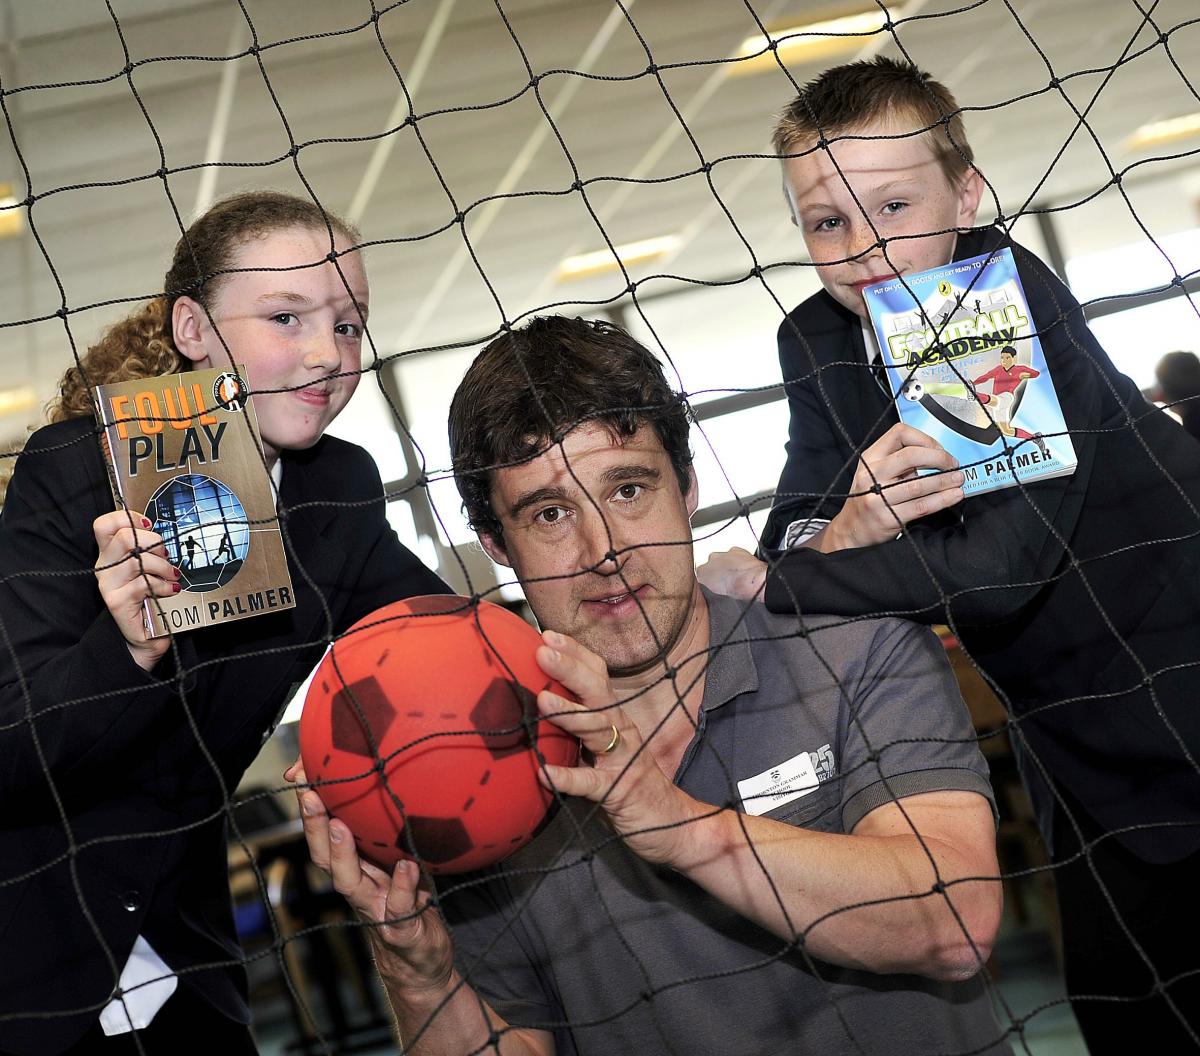 Football met literacy at Thornton Grammar School when a children’s author dropped in. 